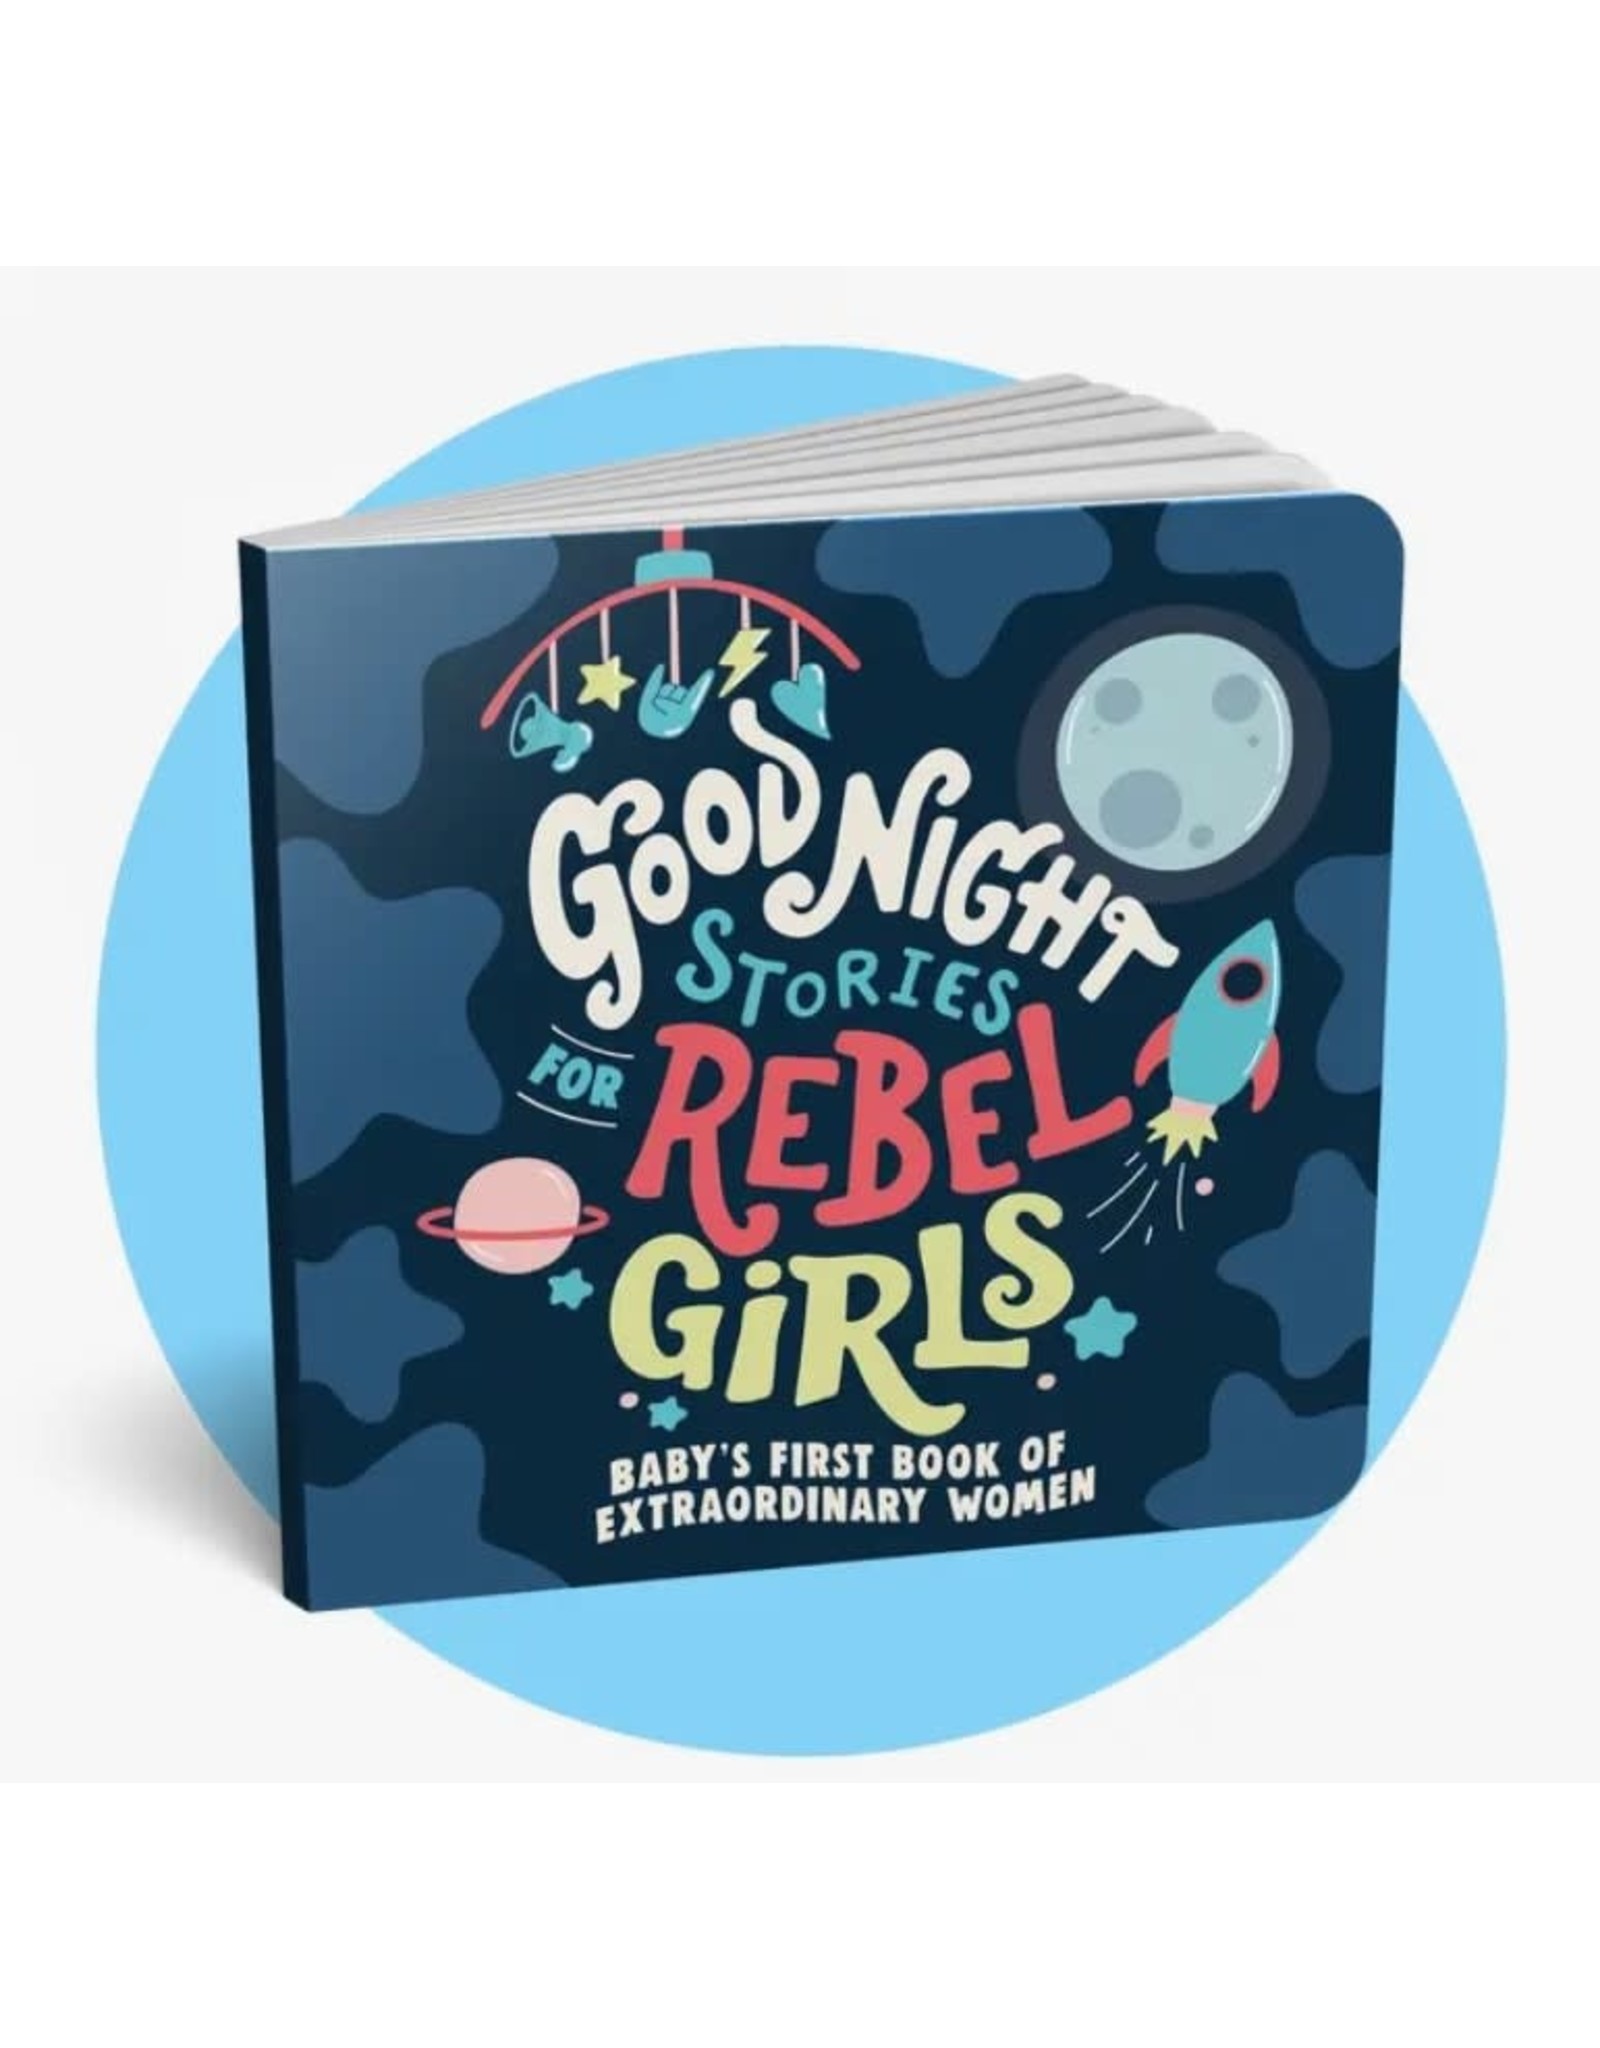 Rebel Girls: Baby's First Book of Extraordinary Women